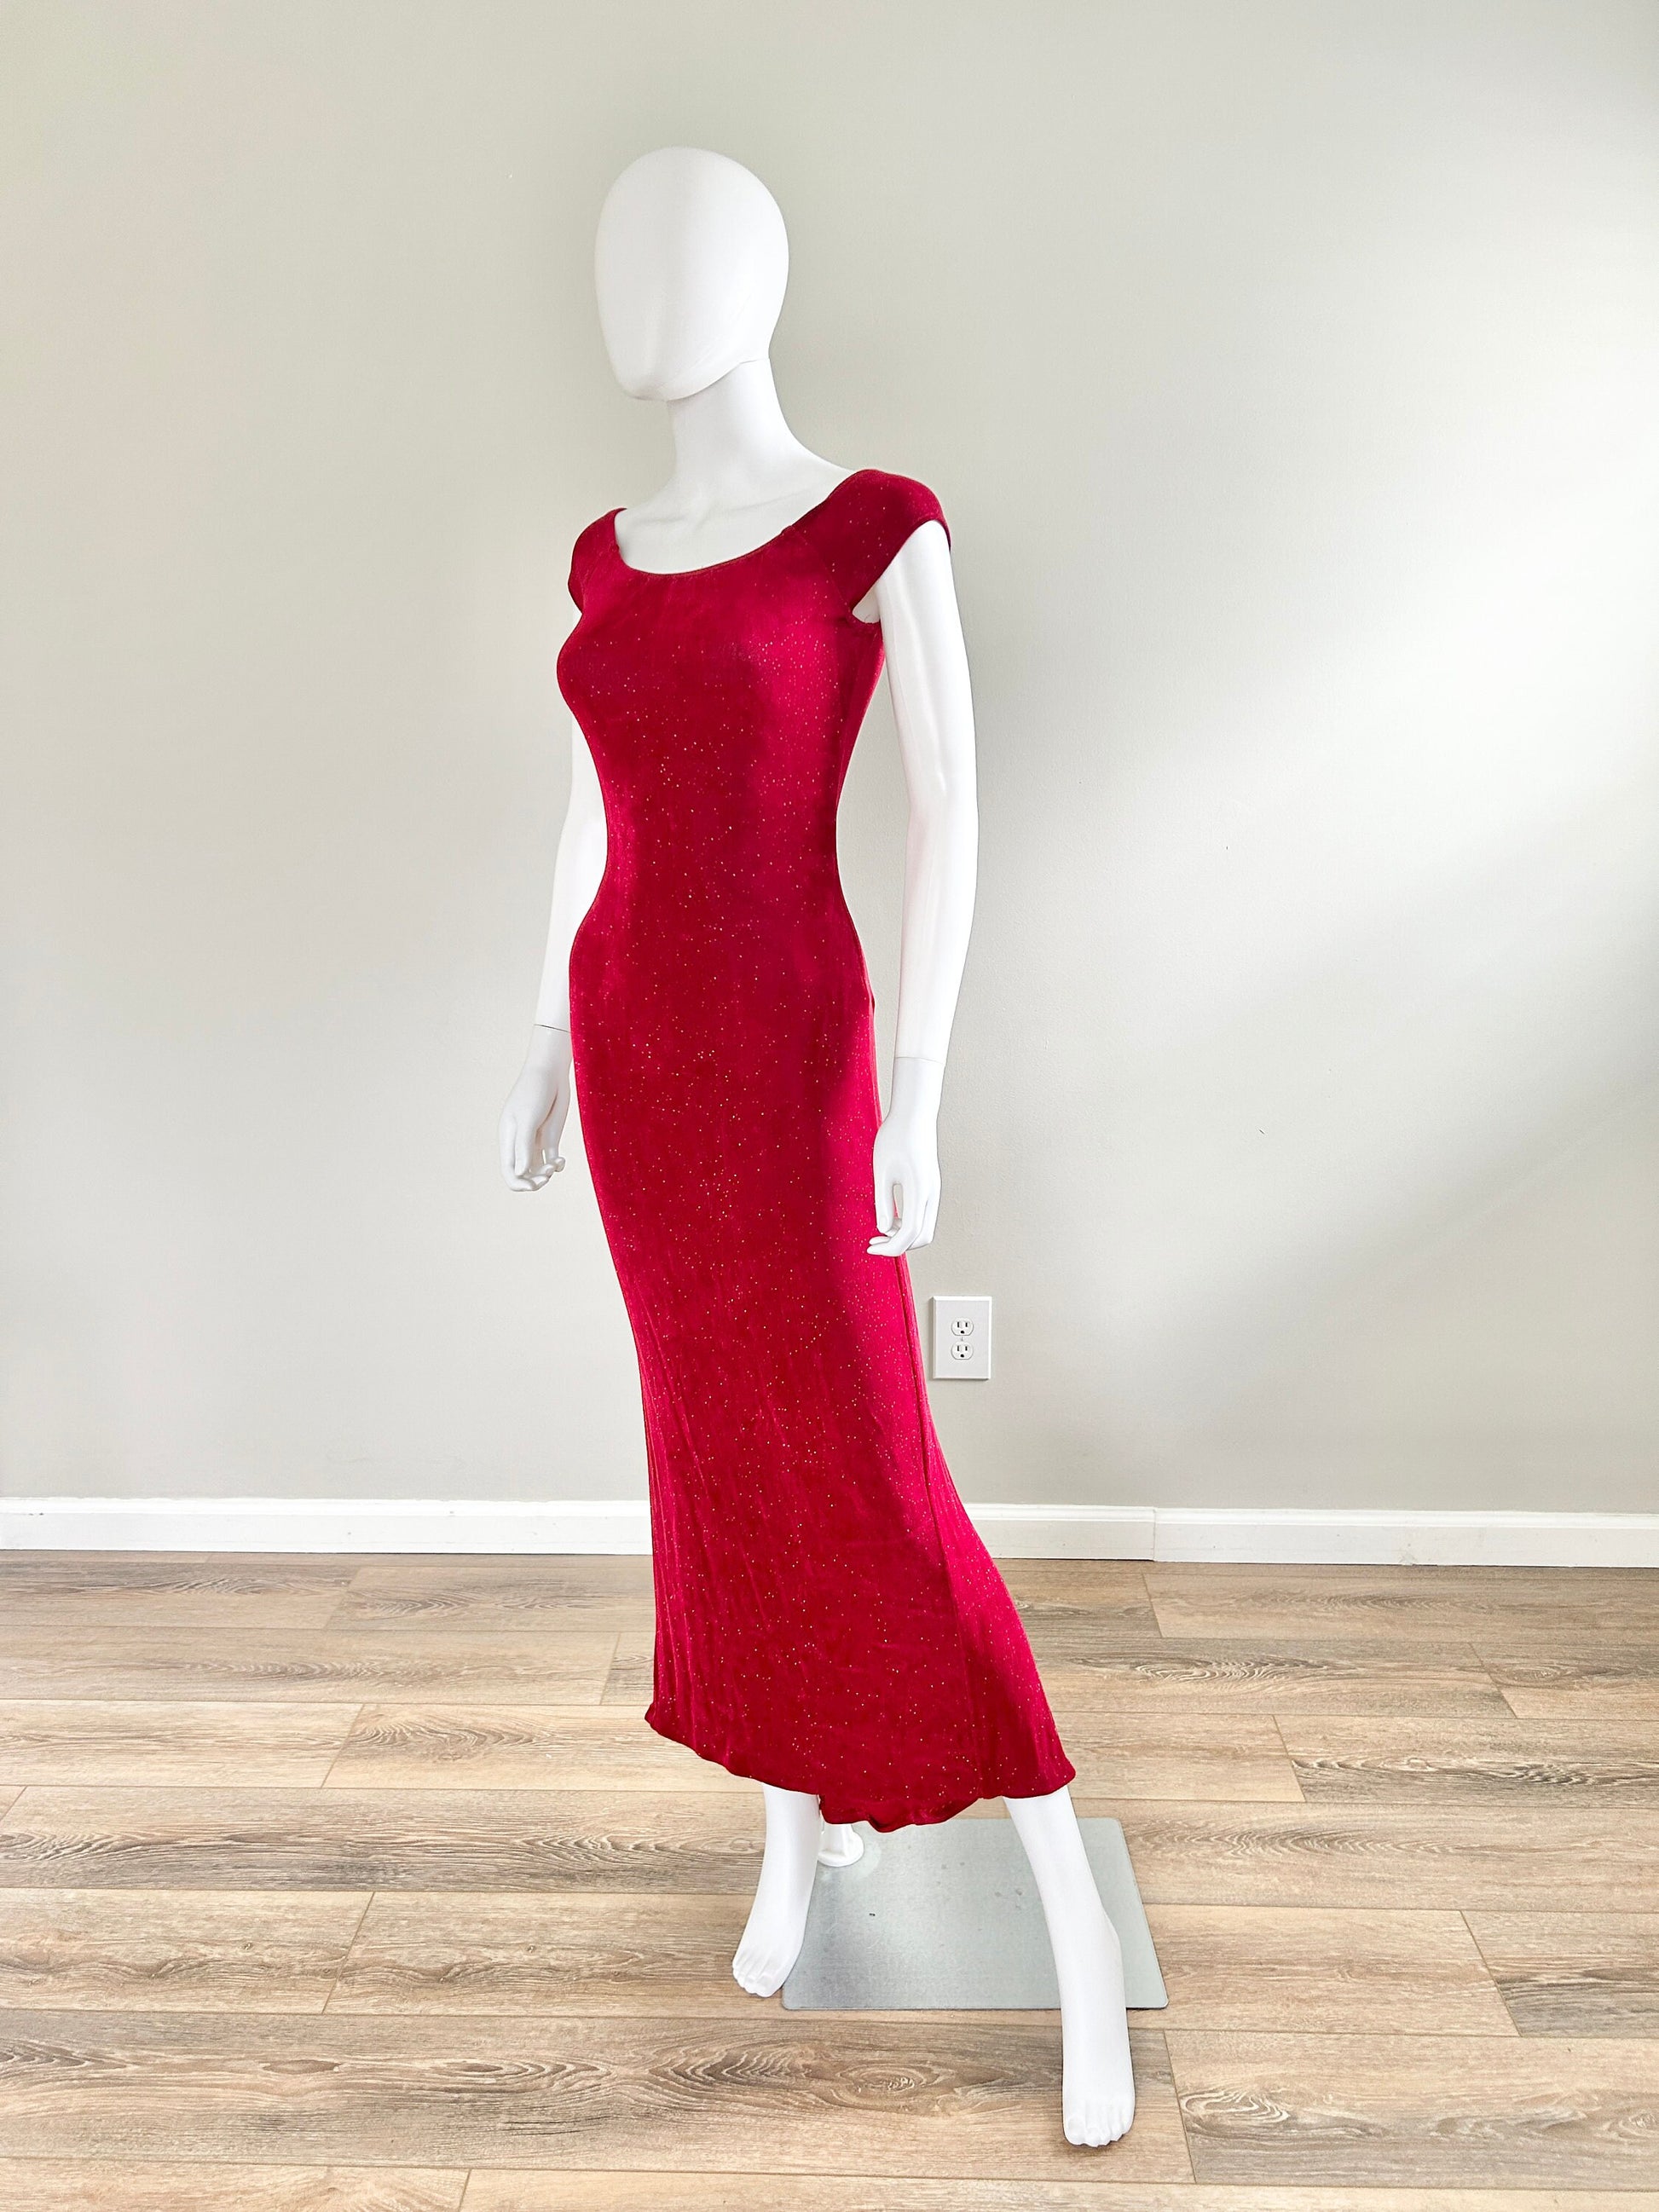 Vintage 1990s Red Body Con Formal Dress / 90s Jessica McClintock for Gunne Sax dress / Size XS S